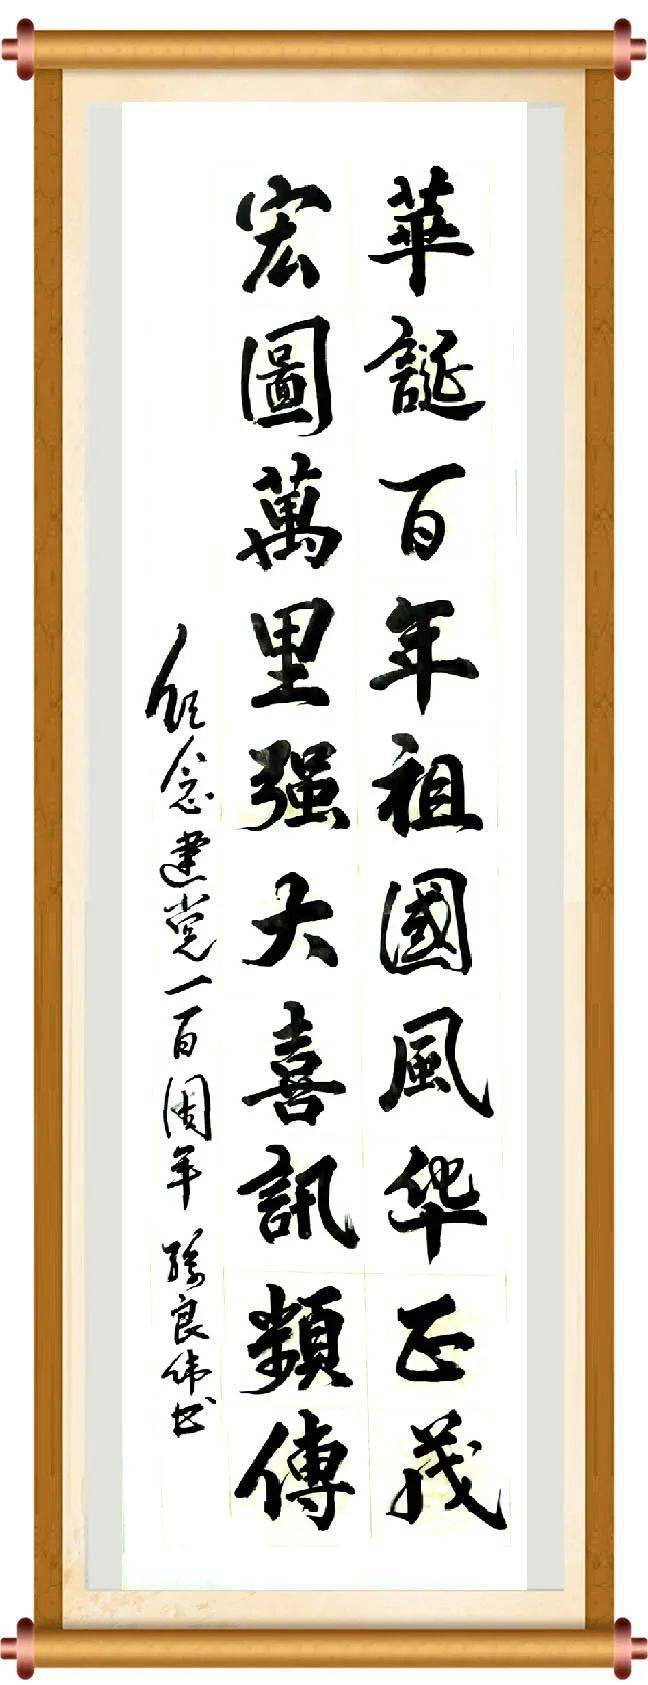 100 zhounian毛笔书法02马德奎(抚顺)《国色天香》史通(大连)《旭日